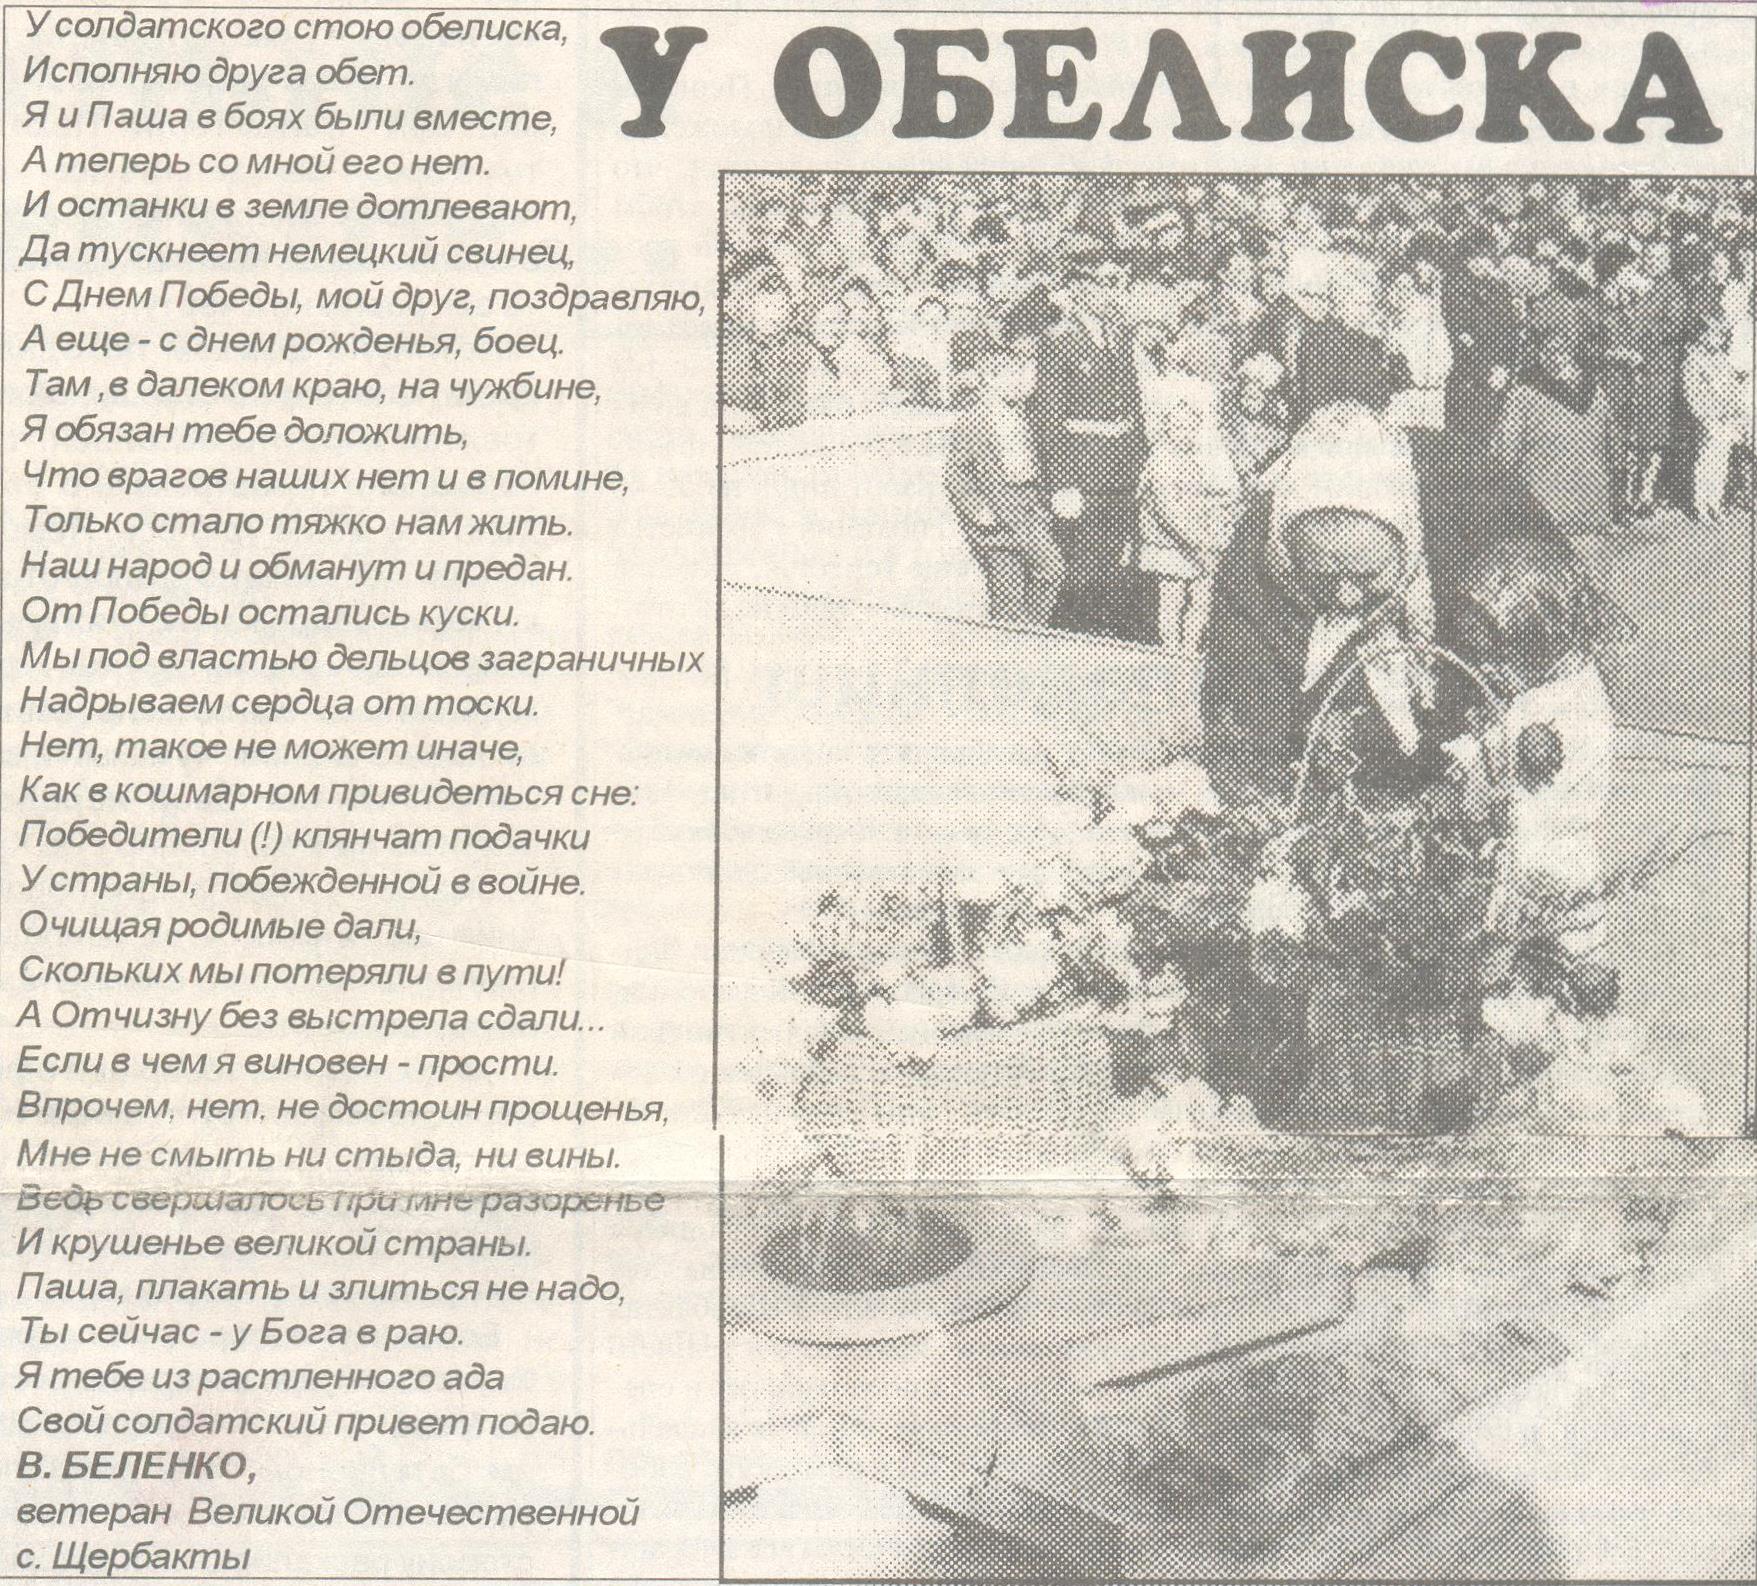 Беленко В. У обелиска / В.Беленко // Трибуна. - 1998. - 9 мая. - С. 1